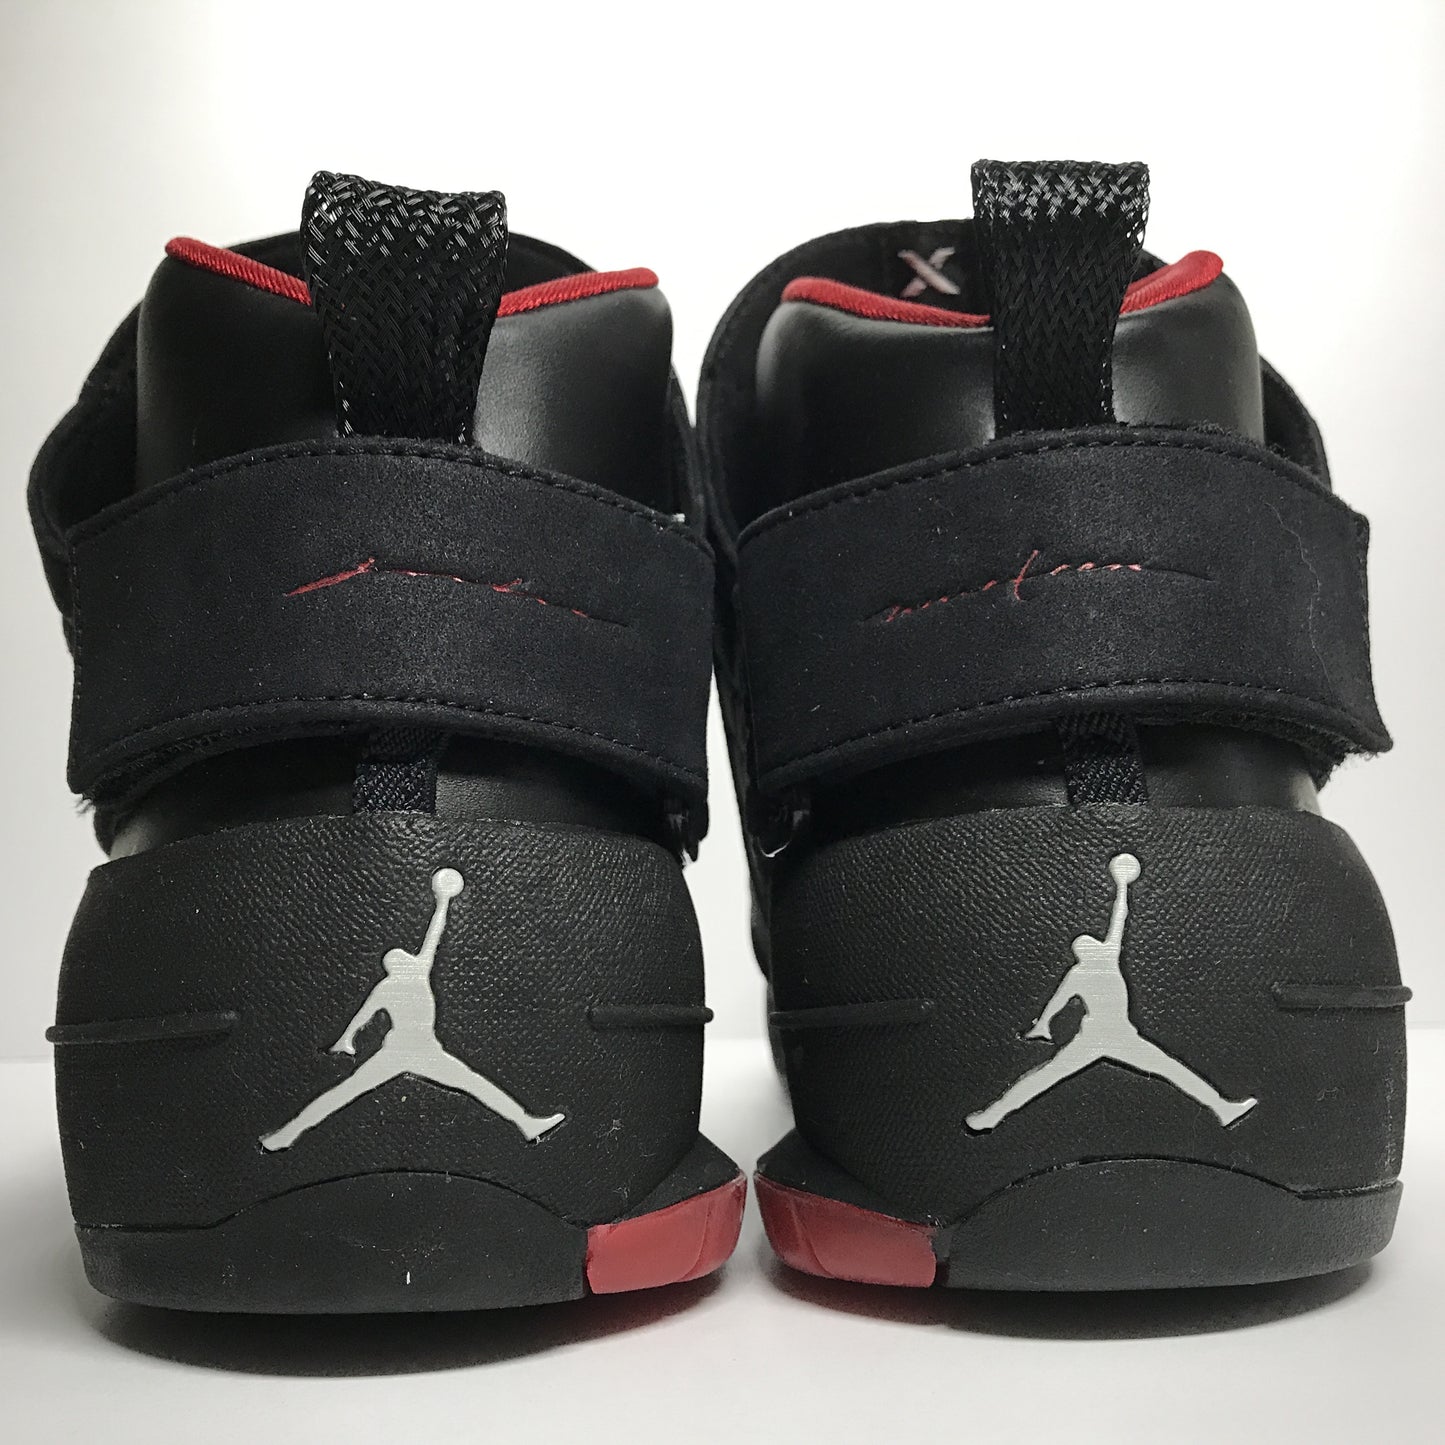 DS Nike Air Jordan 19 XIX CDP Noir/Rouge Taille 9